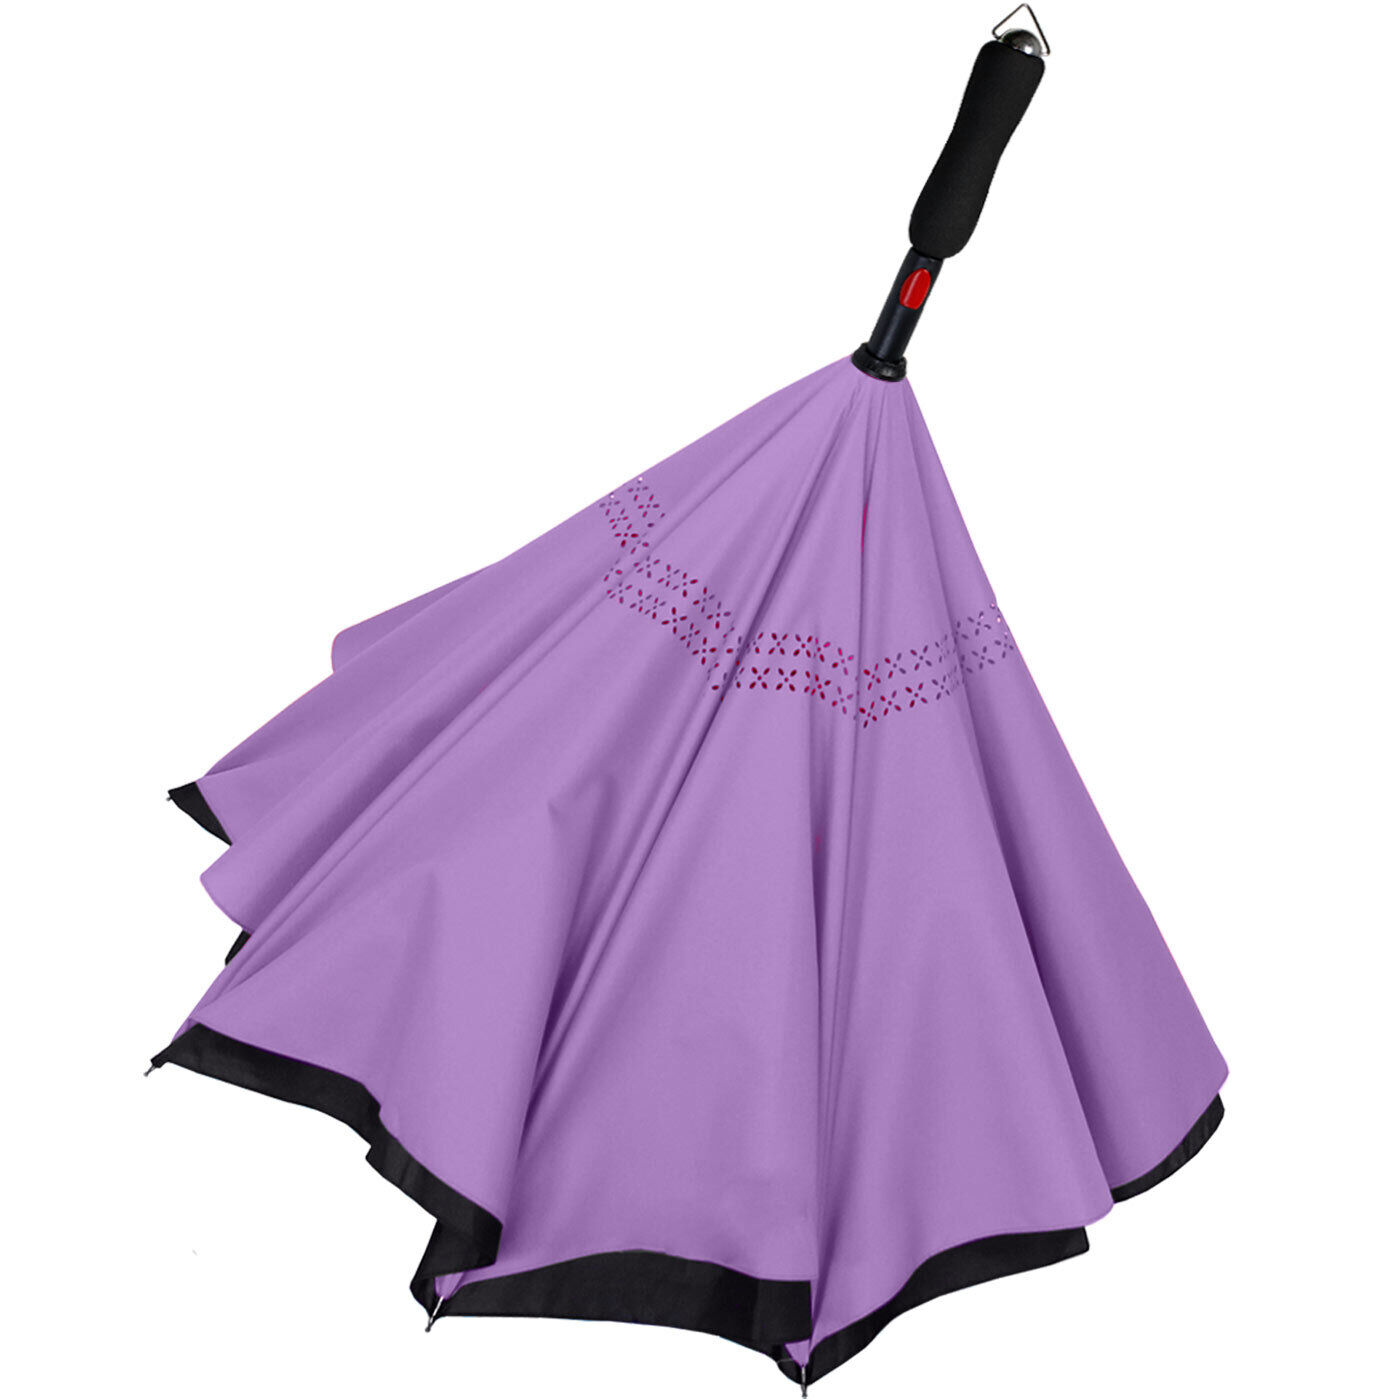 iX-brella Reverse Automatik Regenschirm Damen umgekehrt umgedreht zu öffnen groß